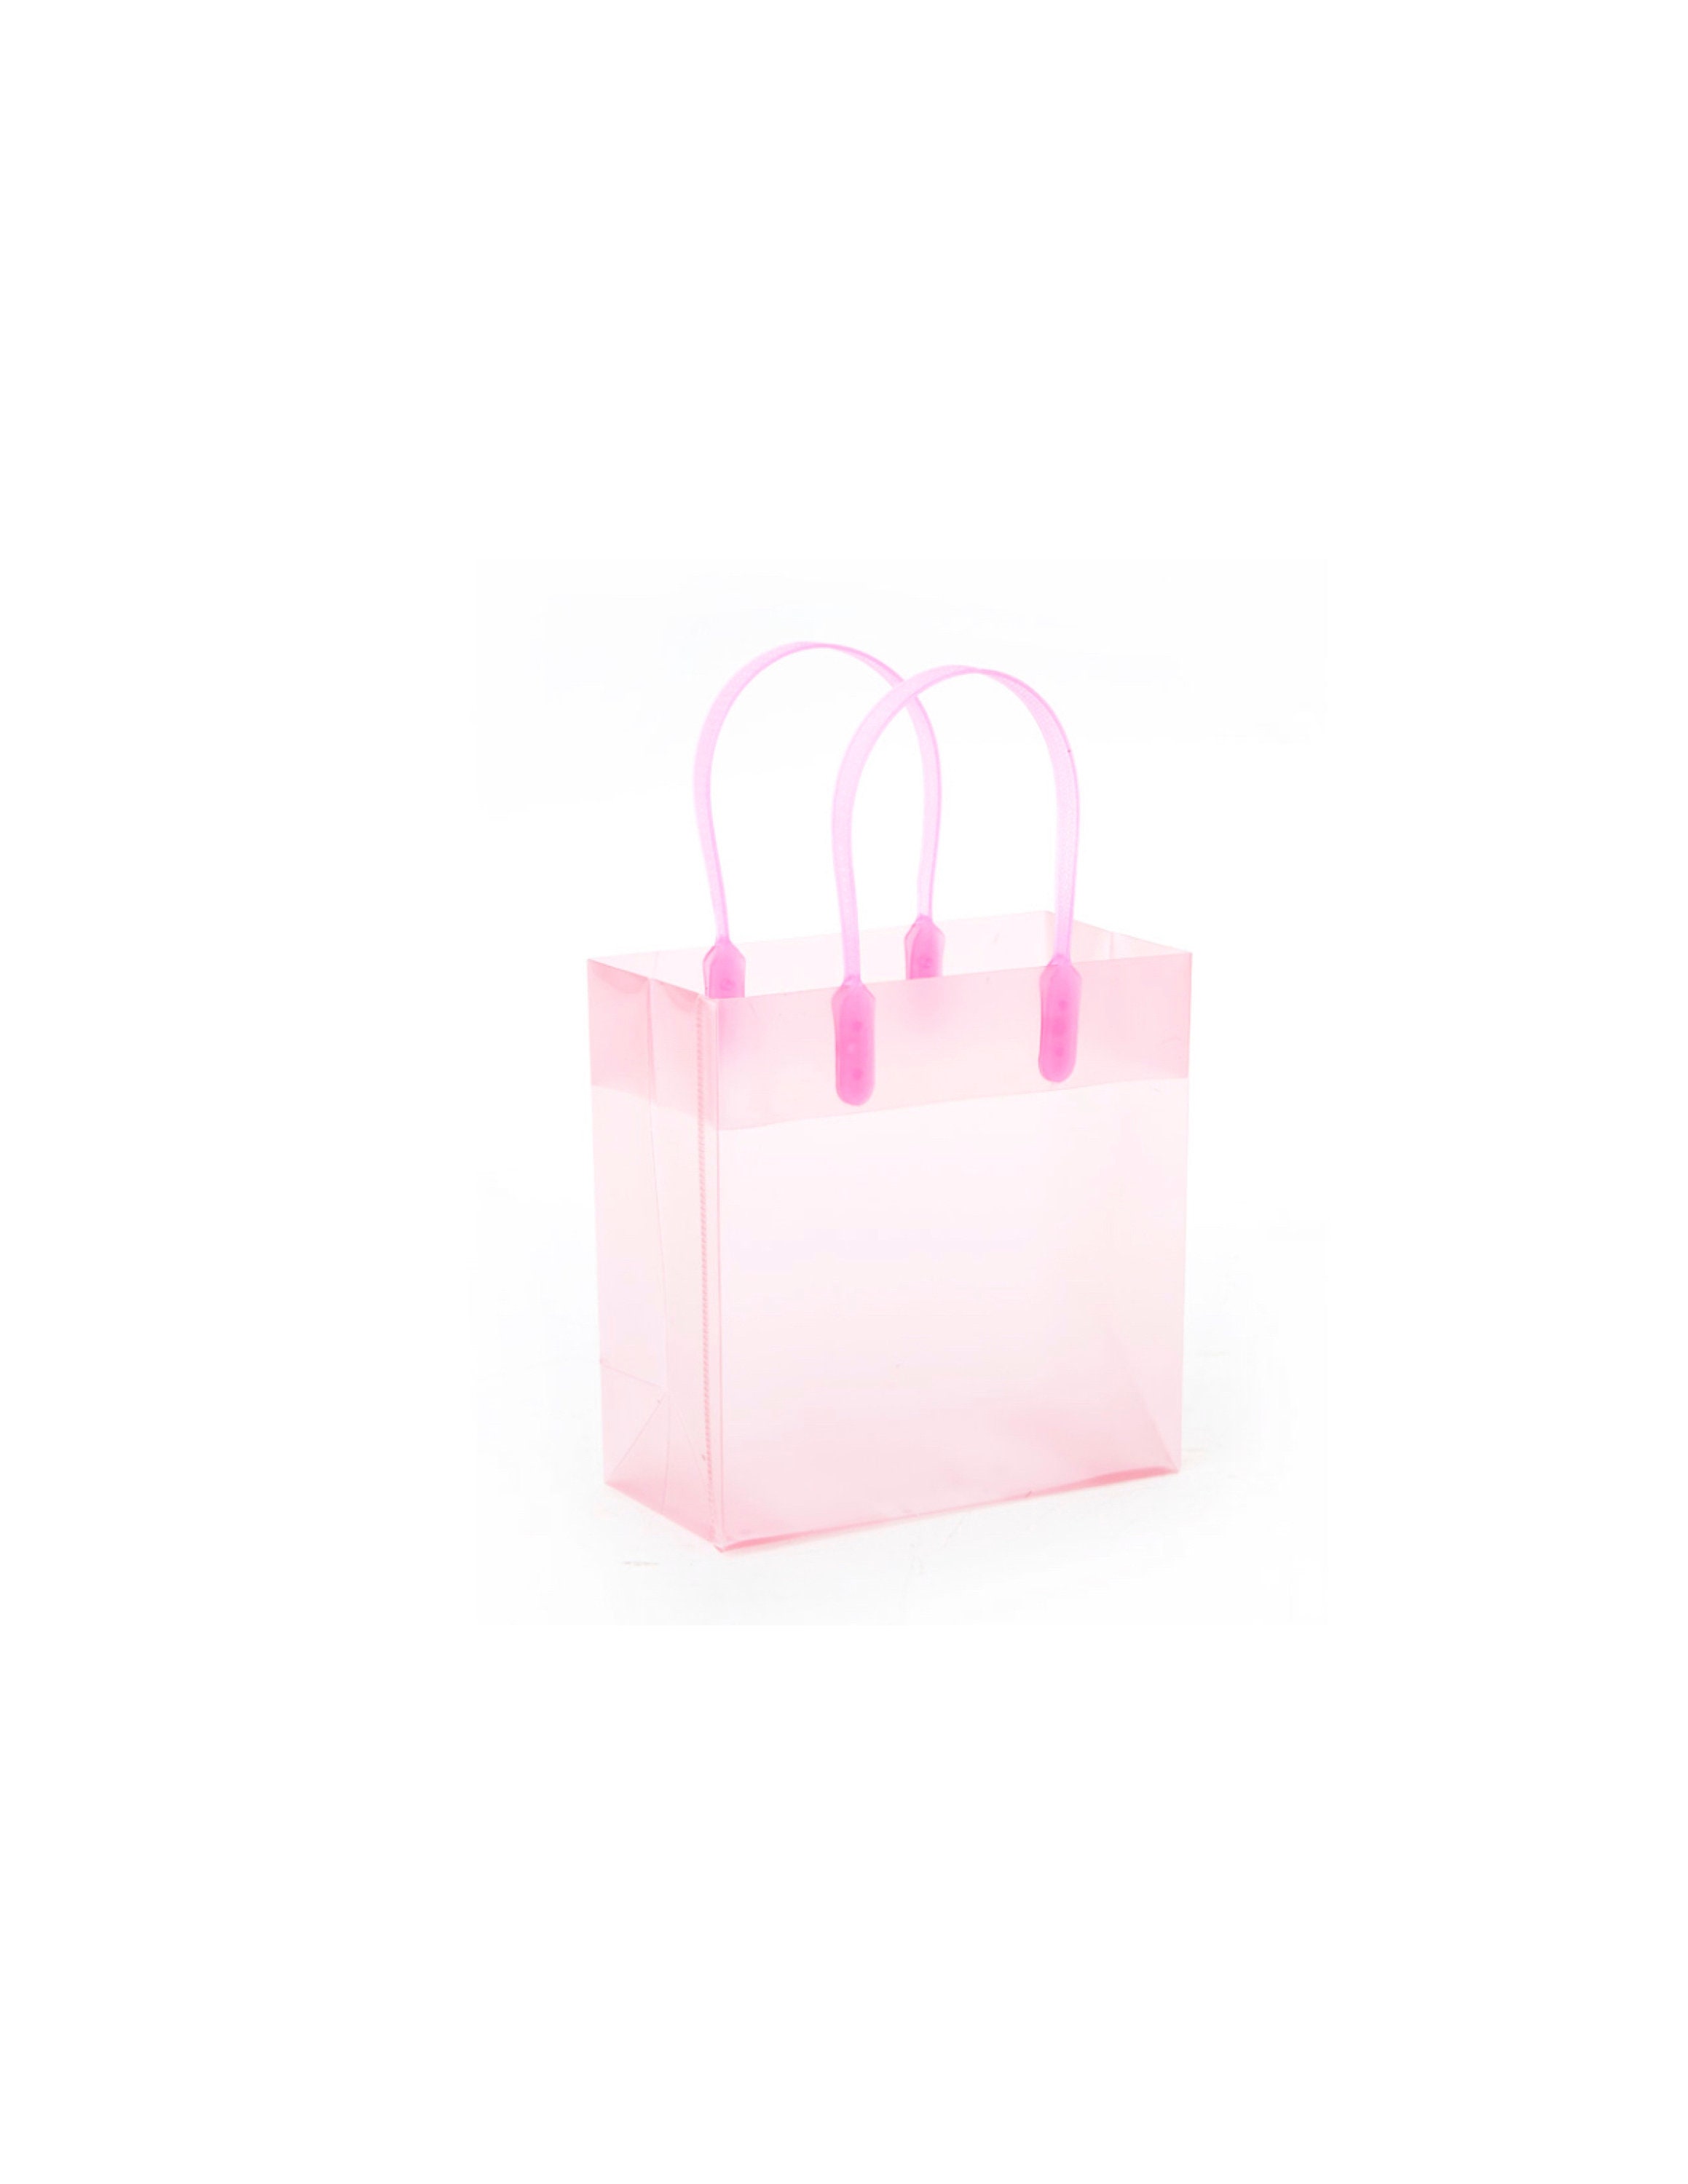 Plastic Transparent Gift Bag with Handles pink 12pcs | Etsy